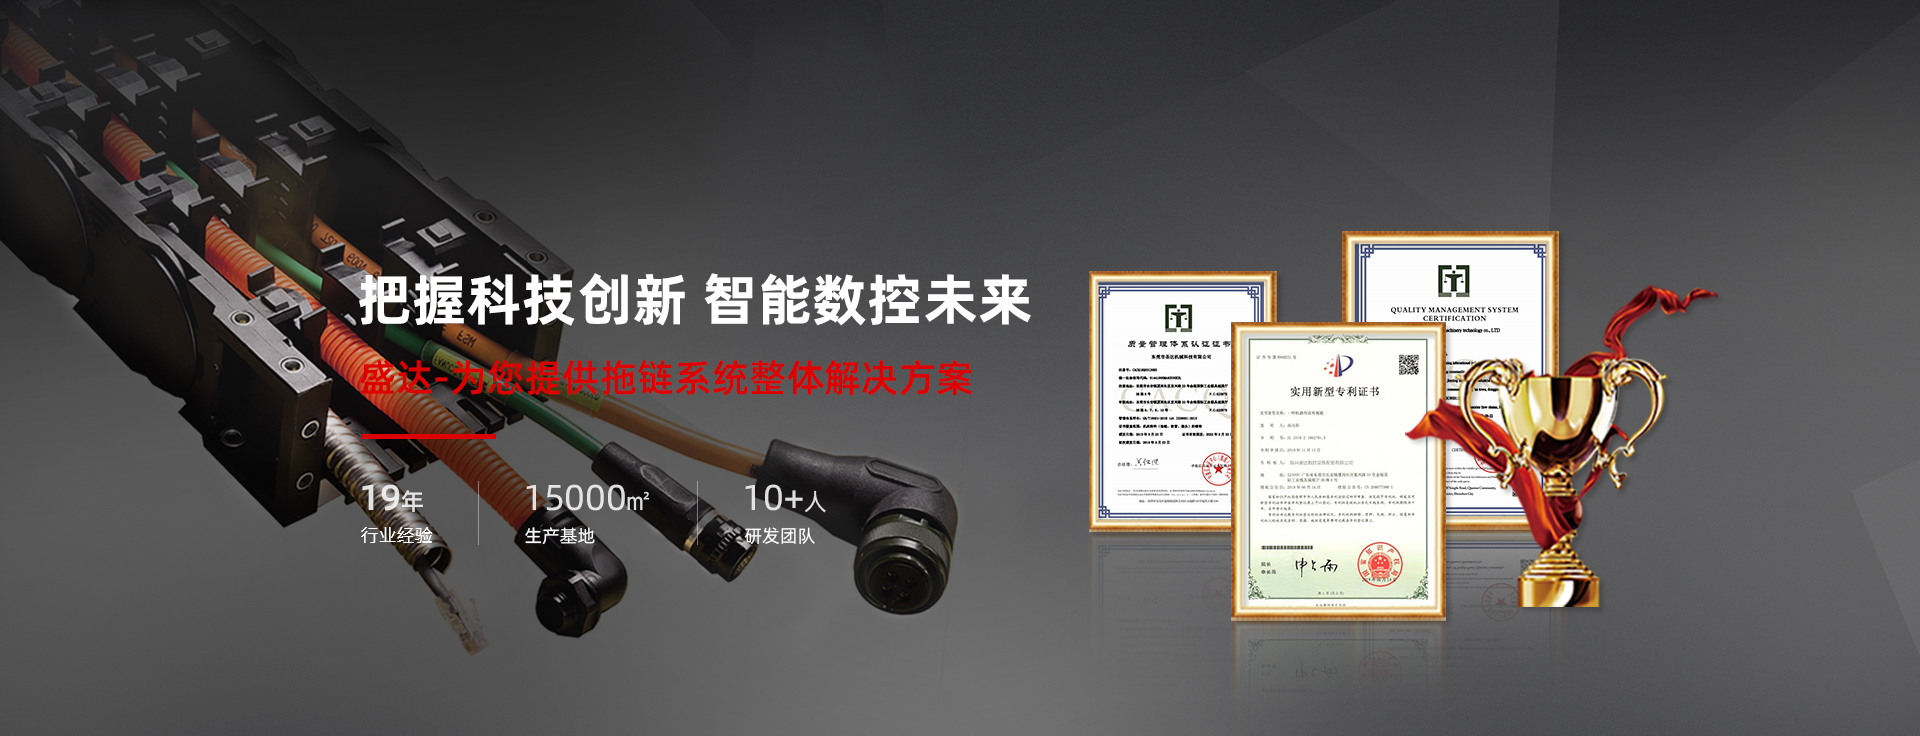 nba中国官方网站机械